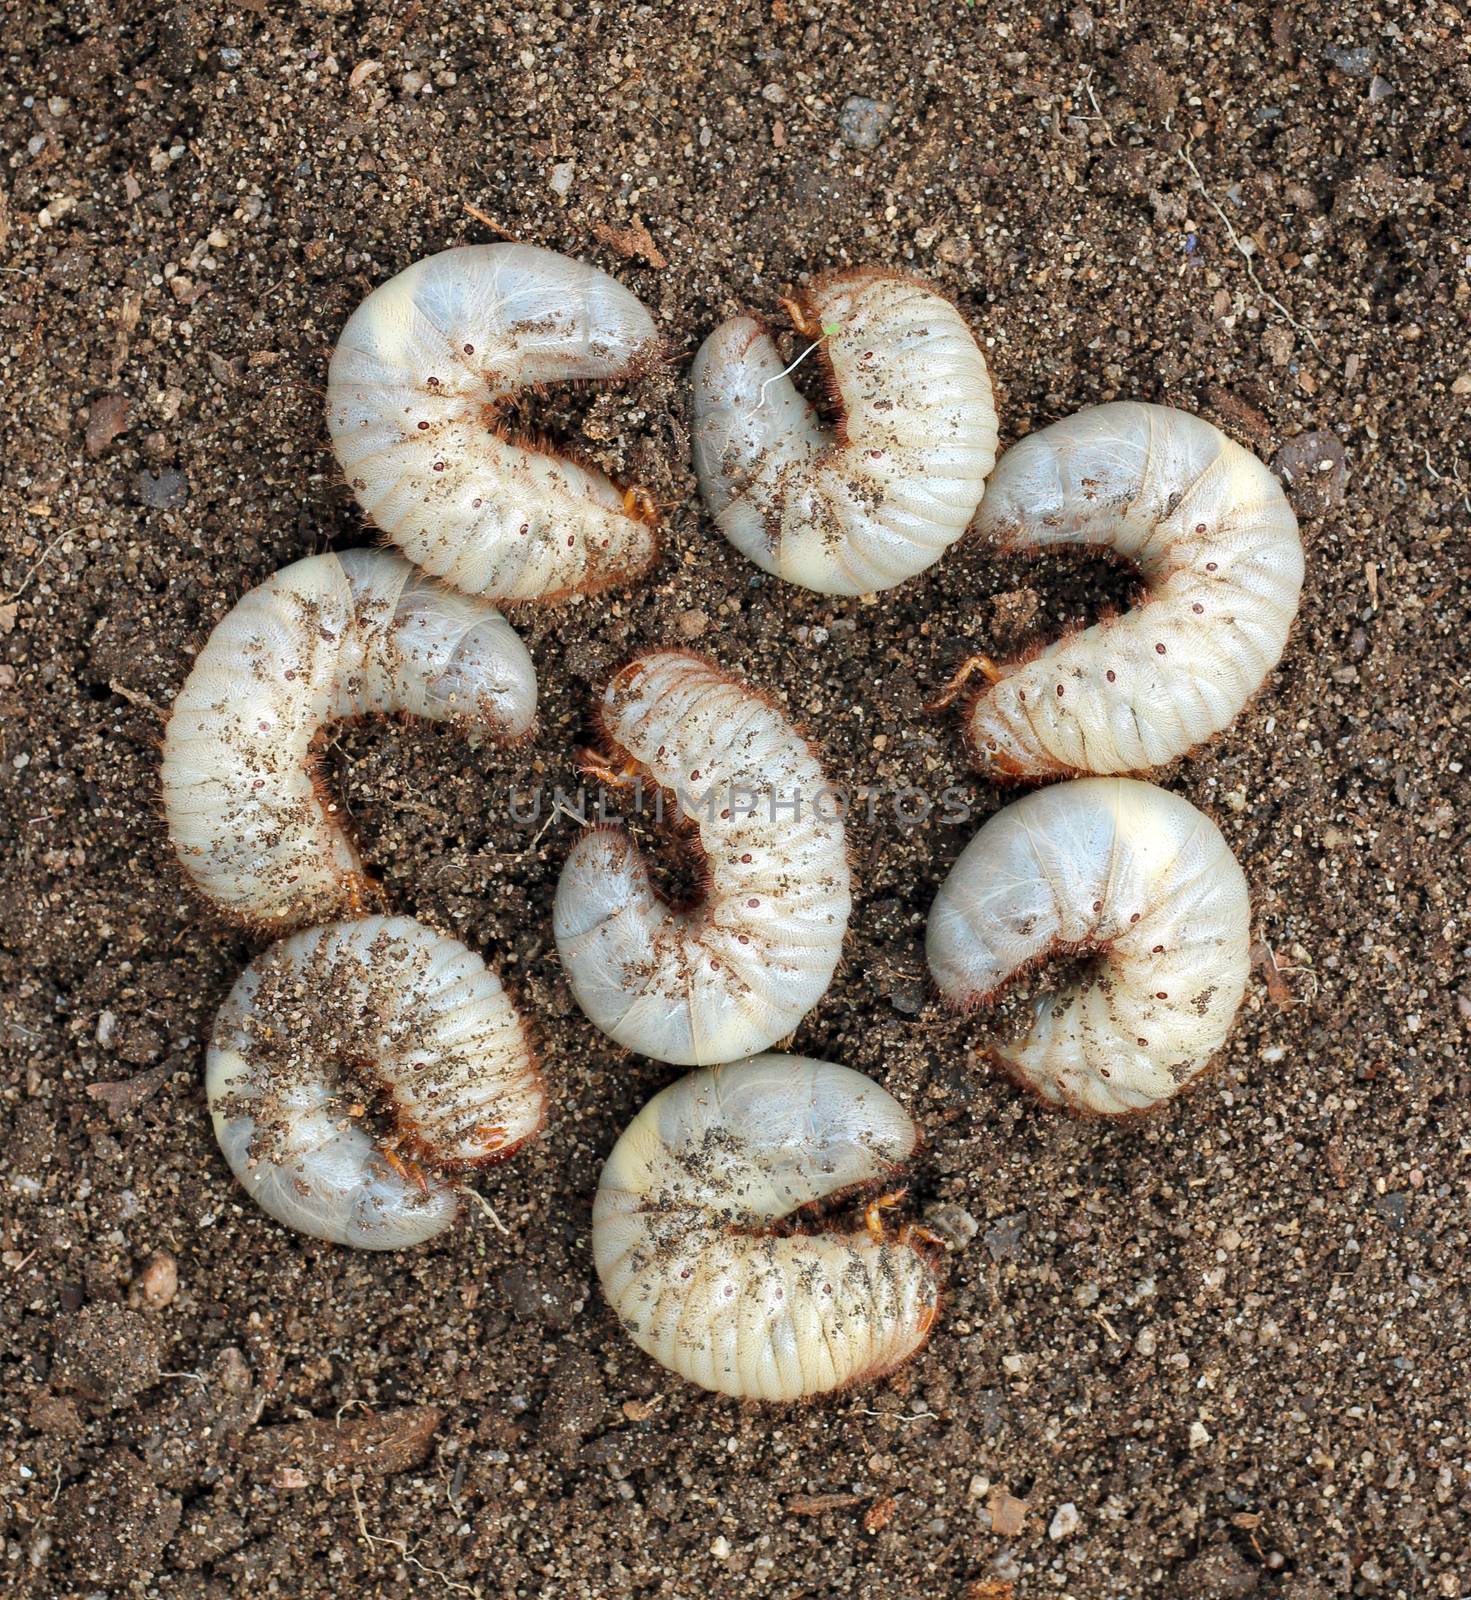 Group of beetle larvae on the ground.